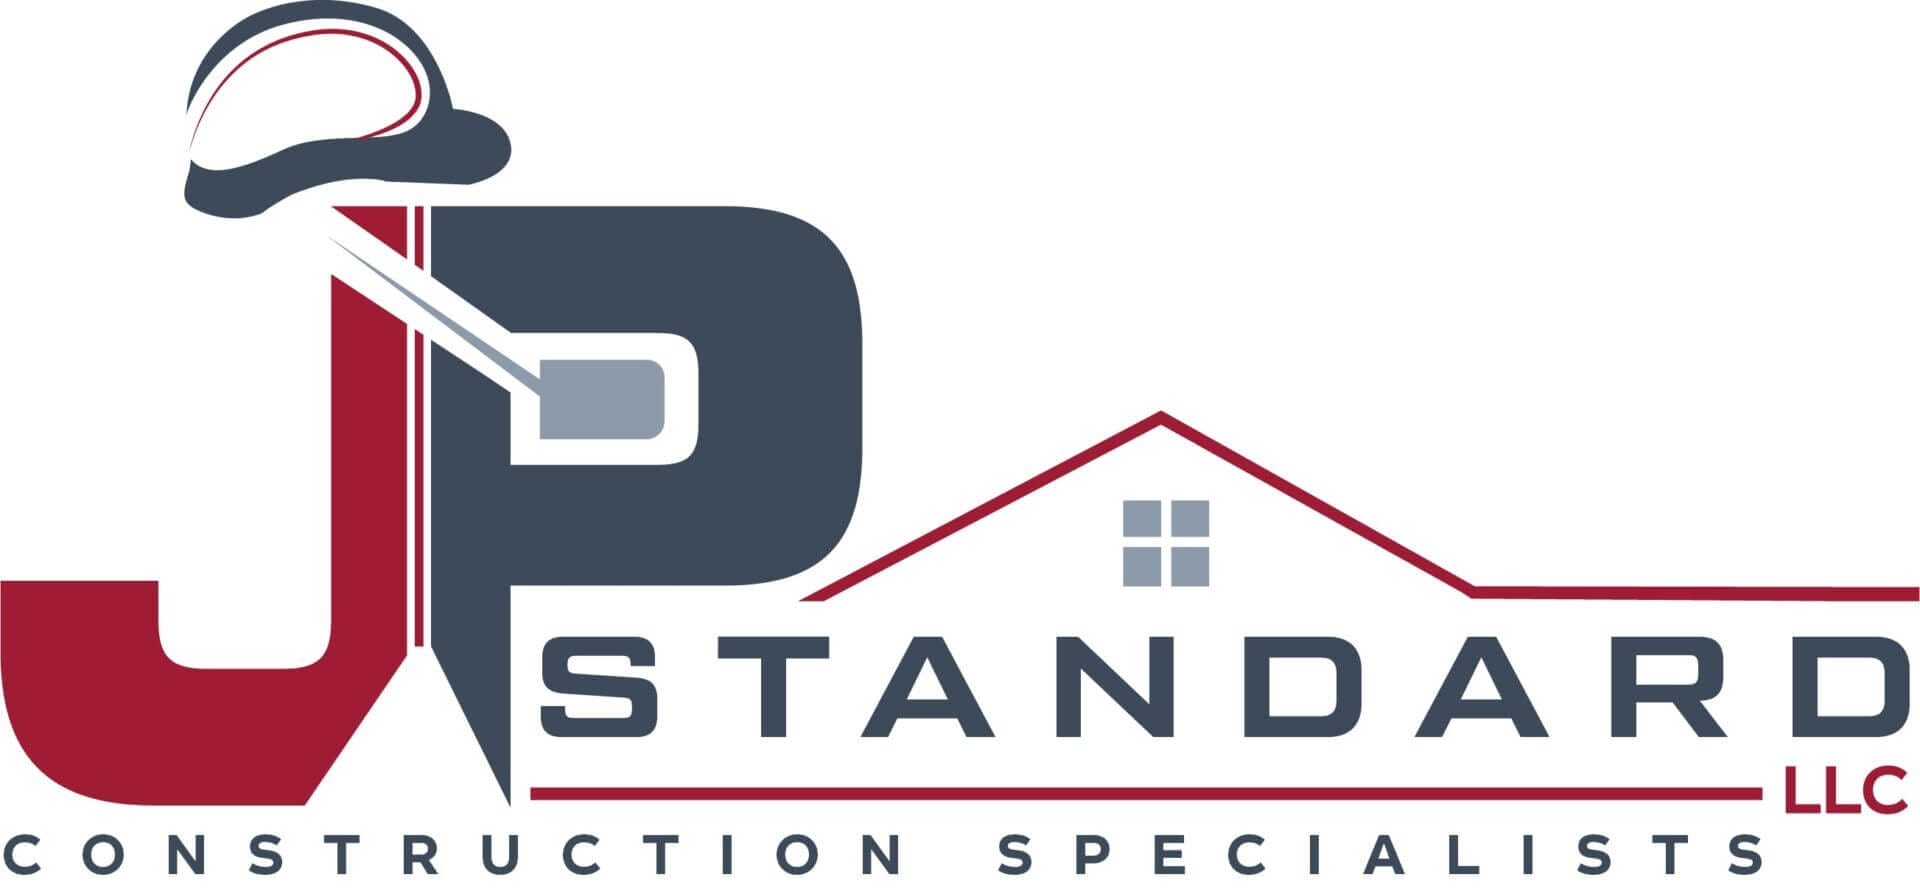 JP Standard LLC